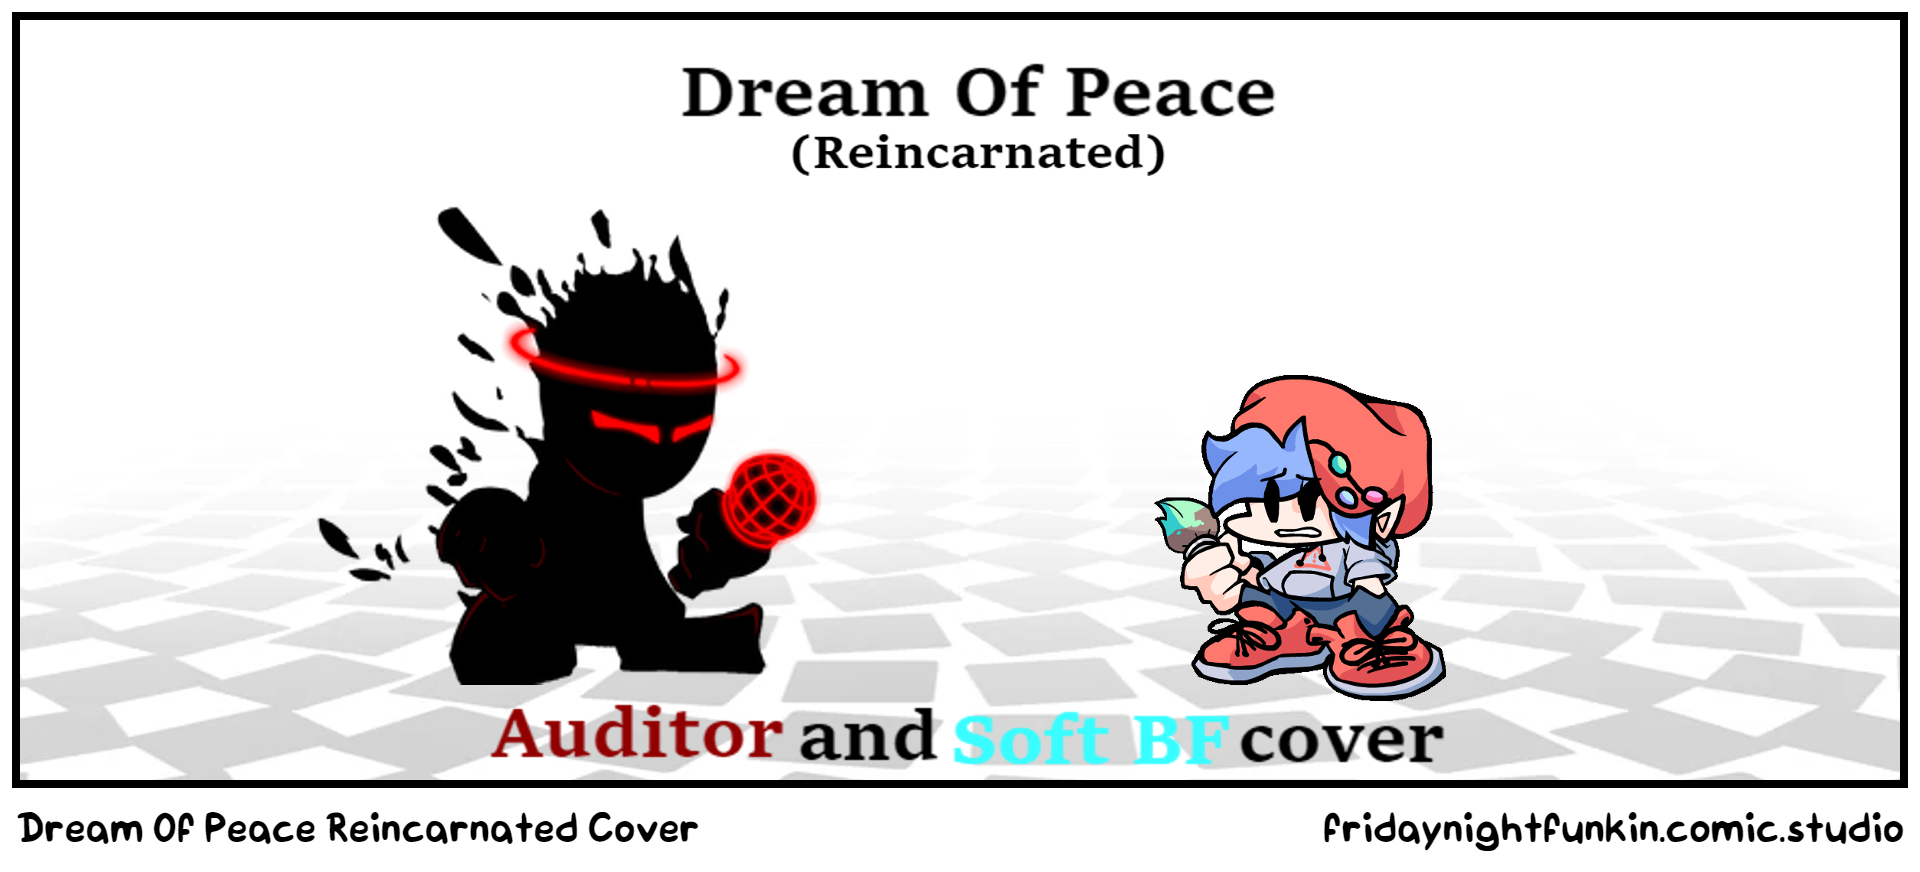 Dream Of Peace Reincarnated Cover